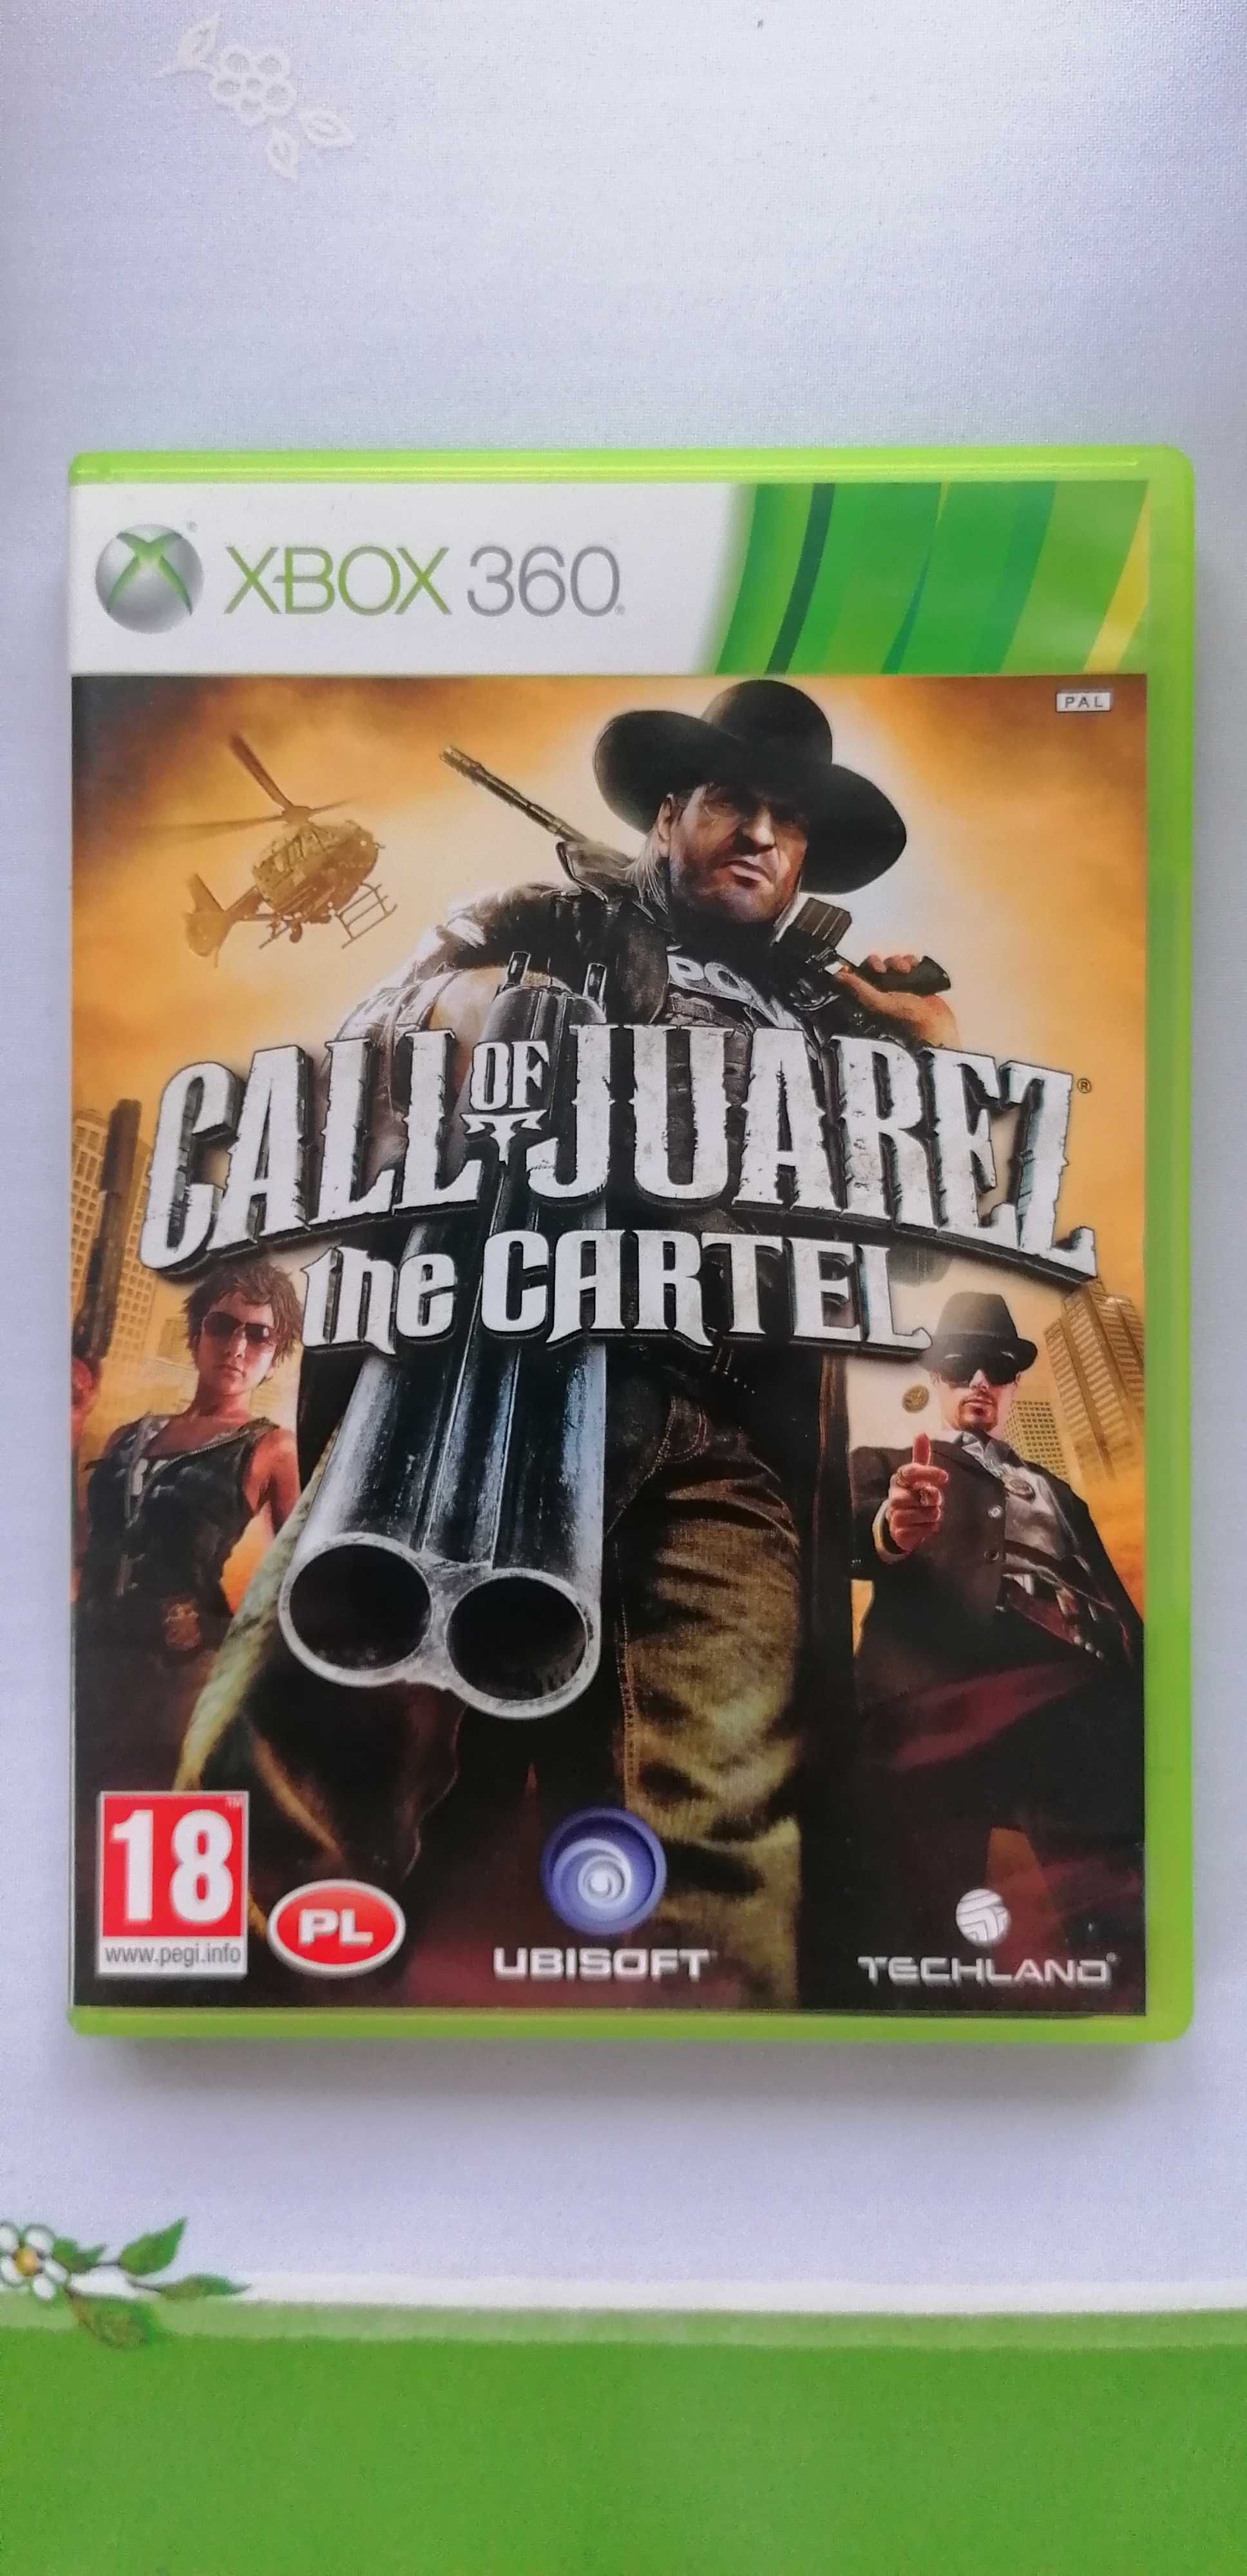 Call of Juarez Xbox 360